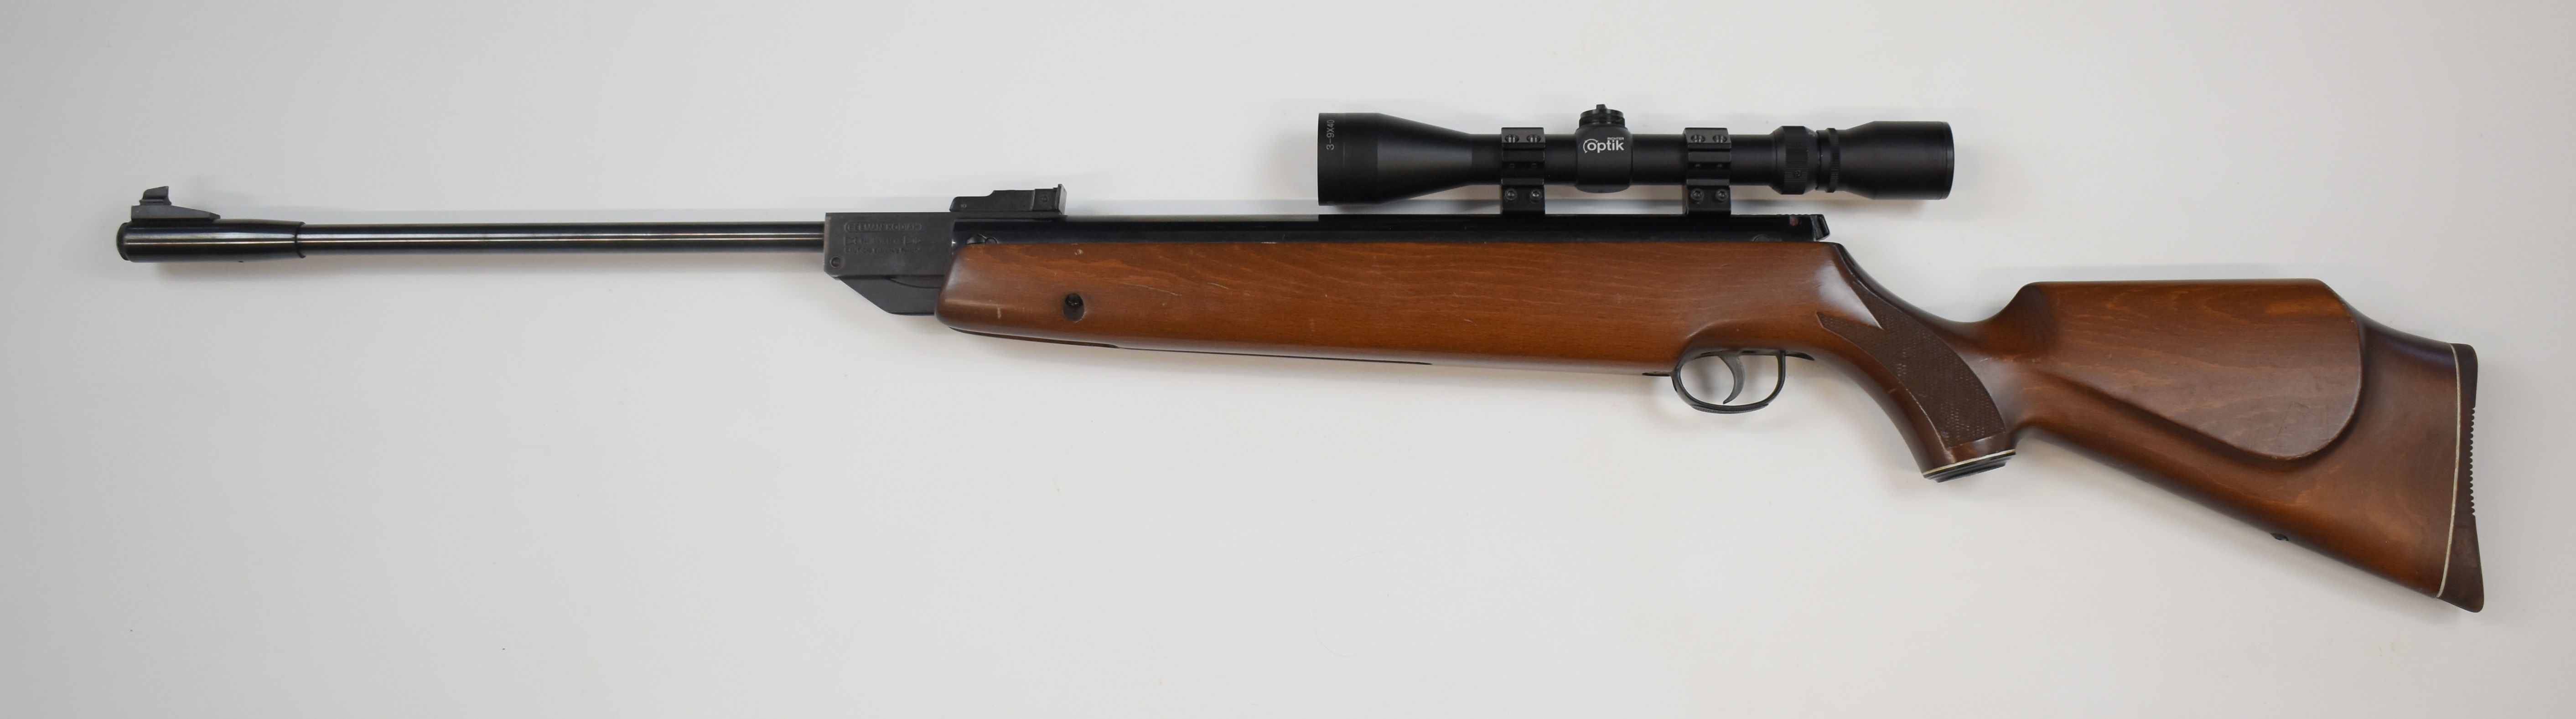 Beeman Kodiak .25 FAC air rifle with chequered semi-pistol grip, raised cheek piece, adjustable - Image 6 of 10